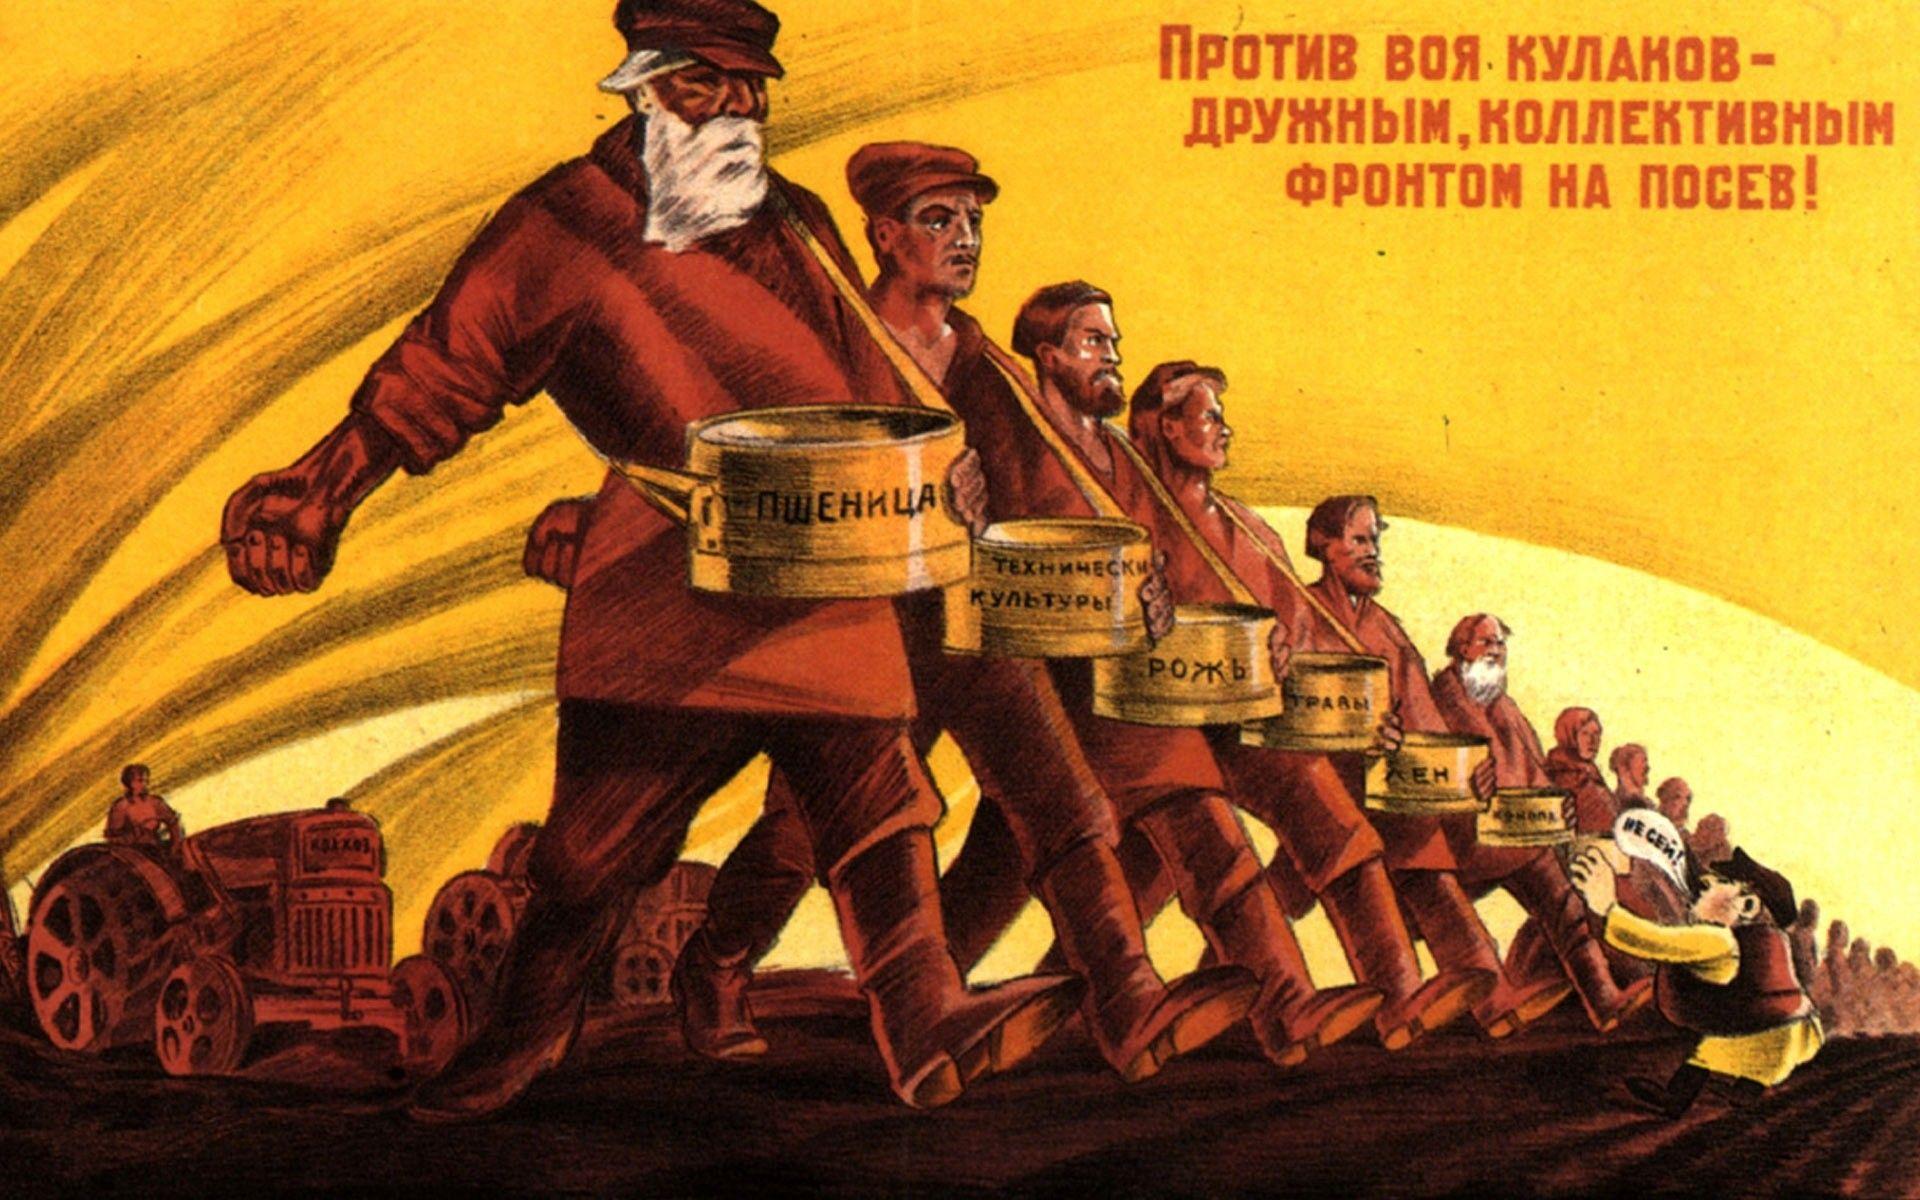 Soviet Union Wallpaper